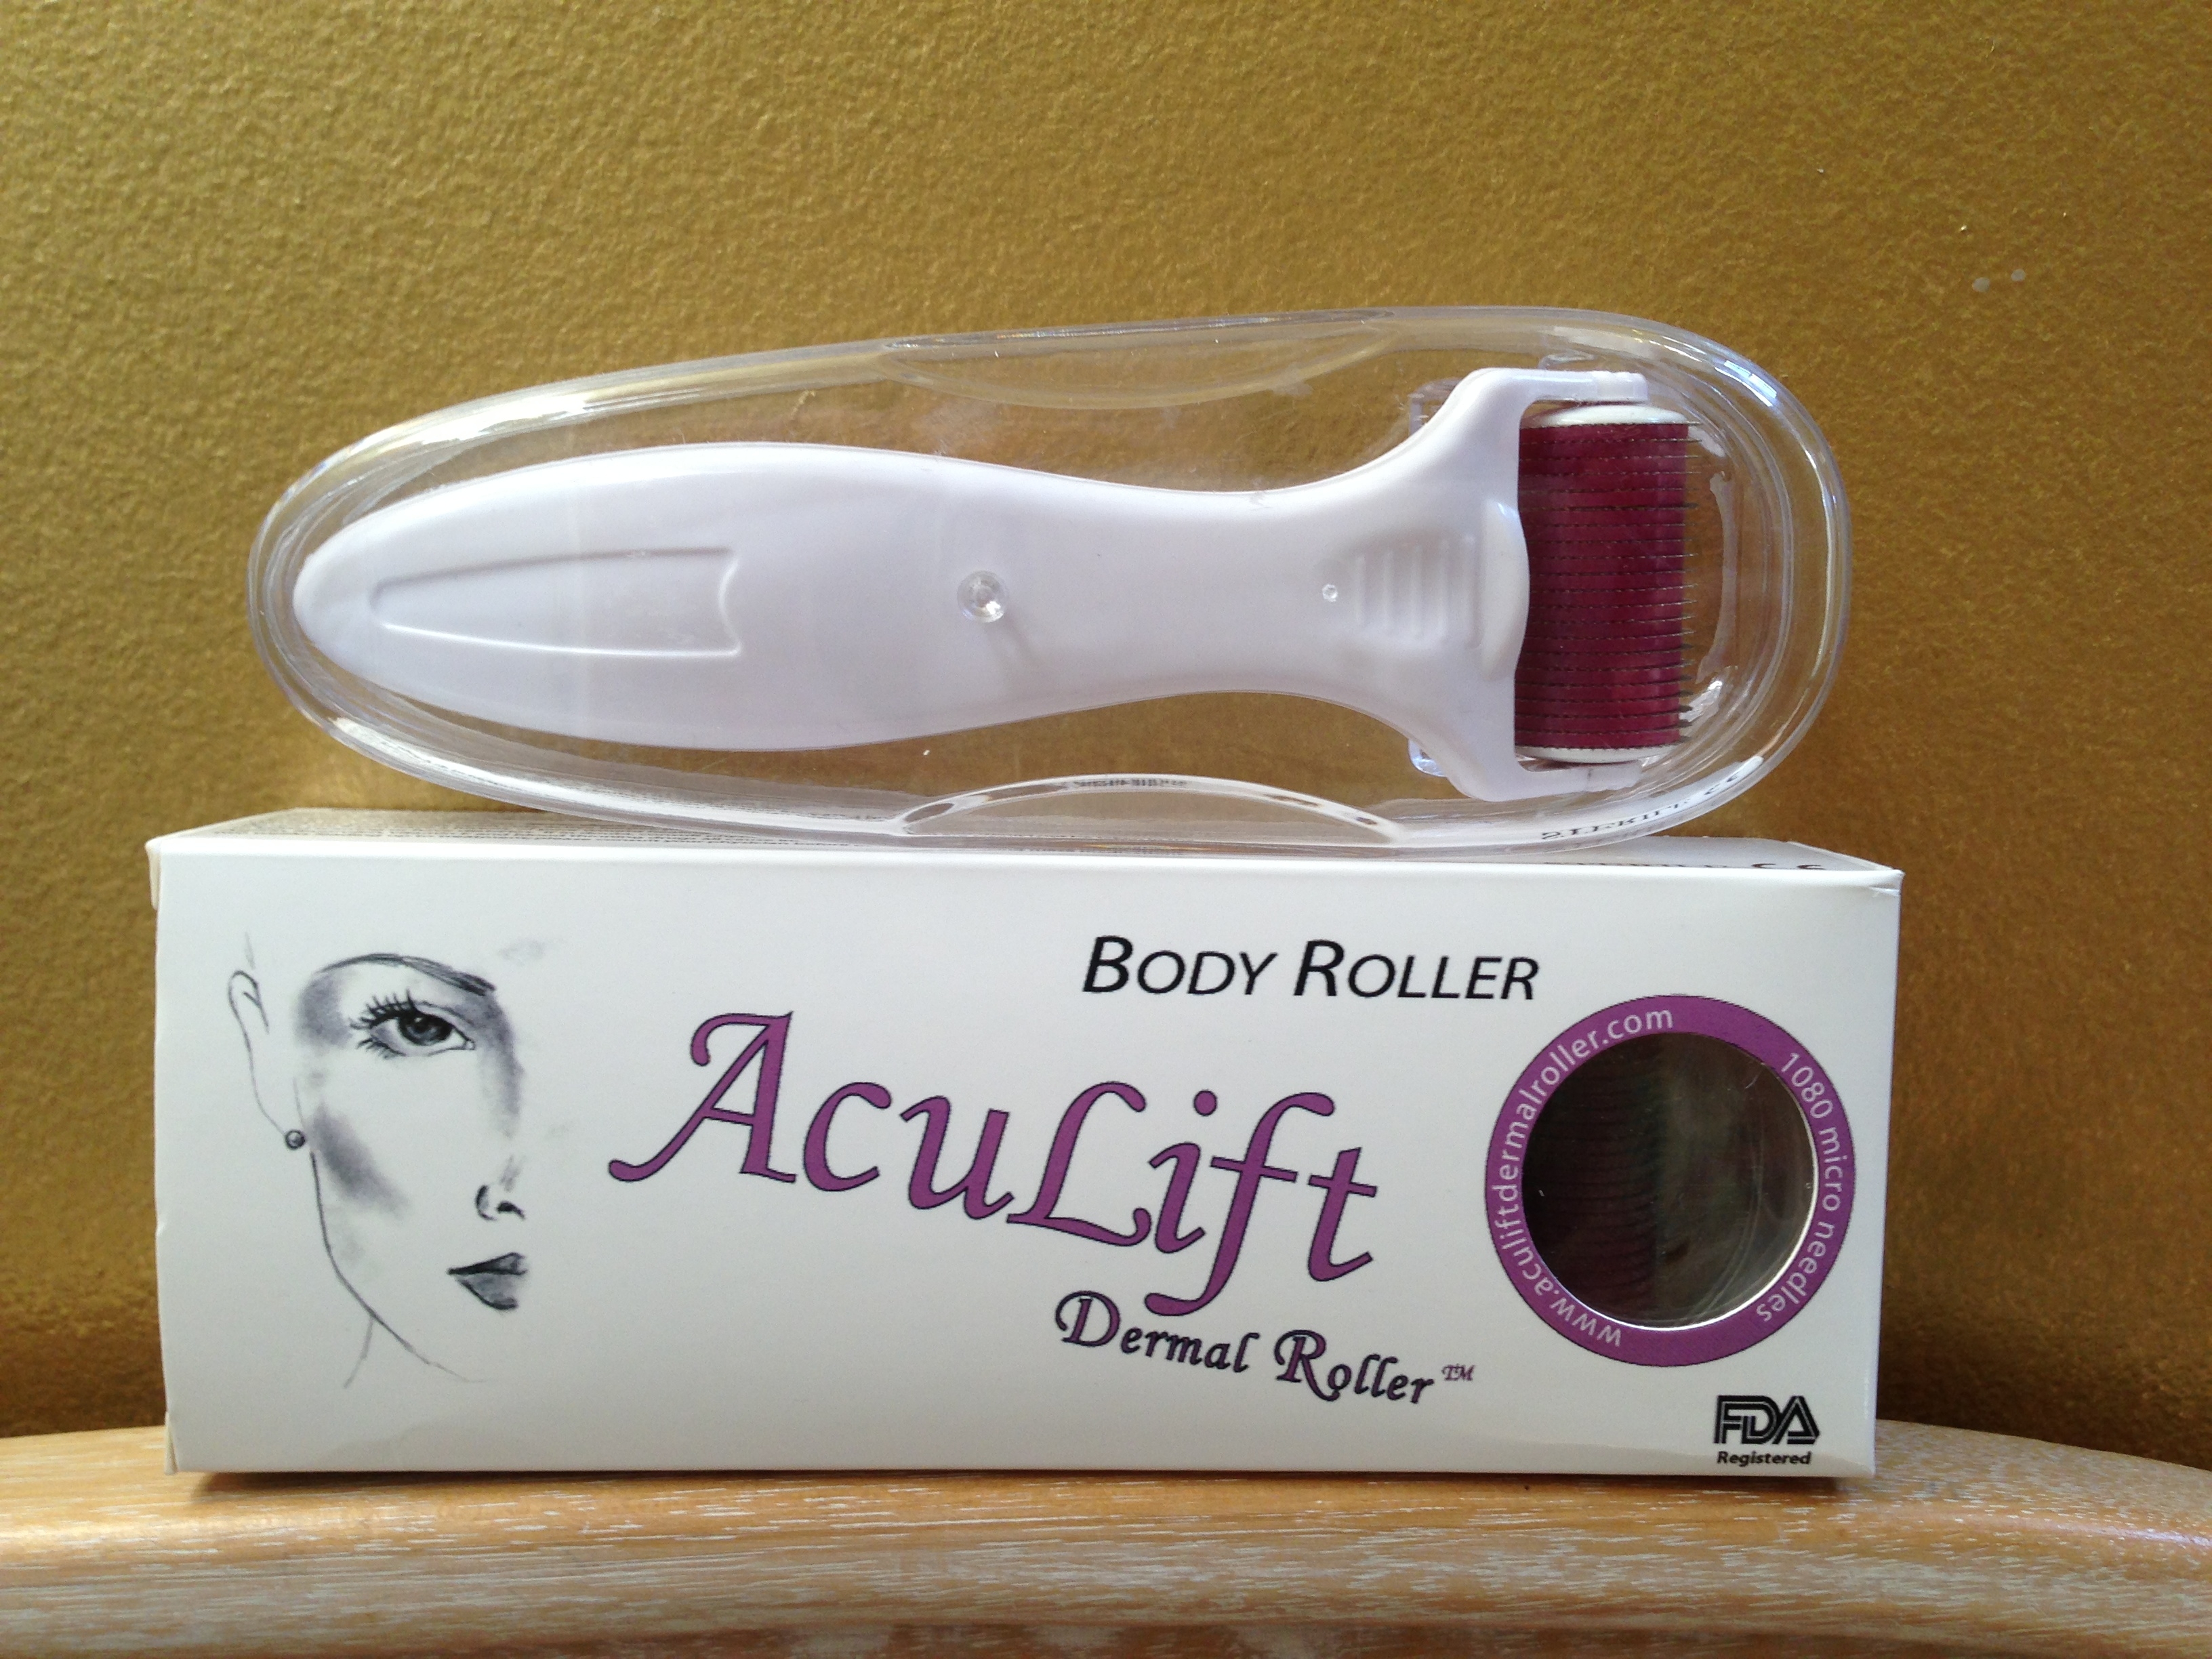 AcuLift Body Derma Roller, 1.0mm